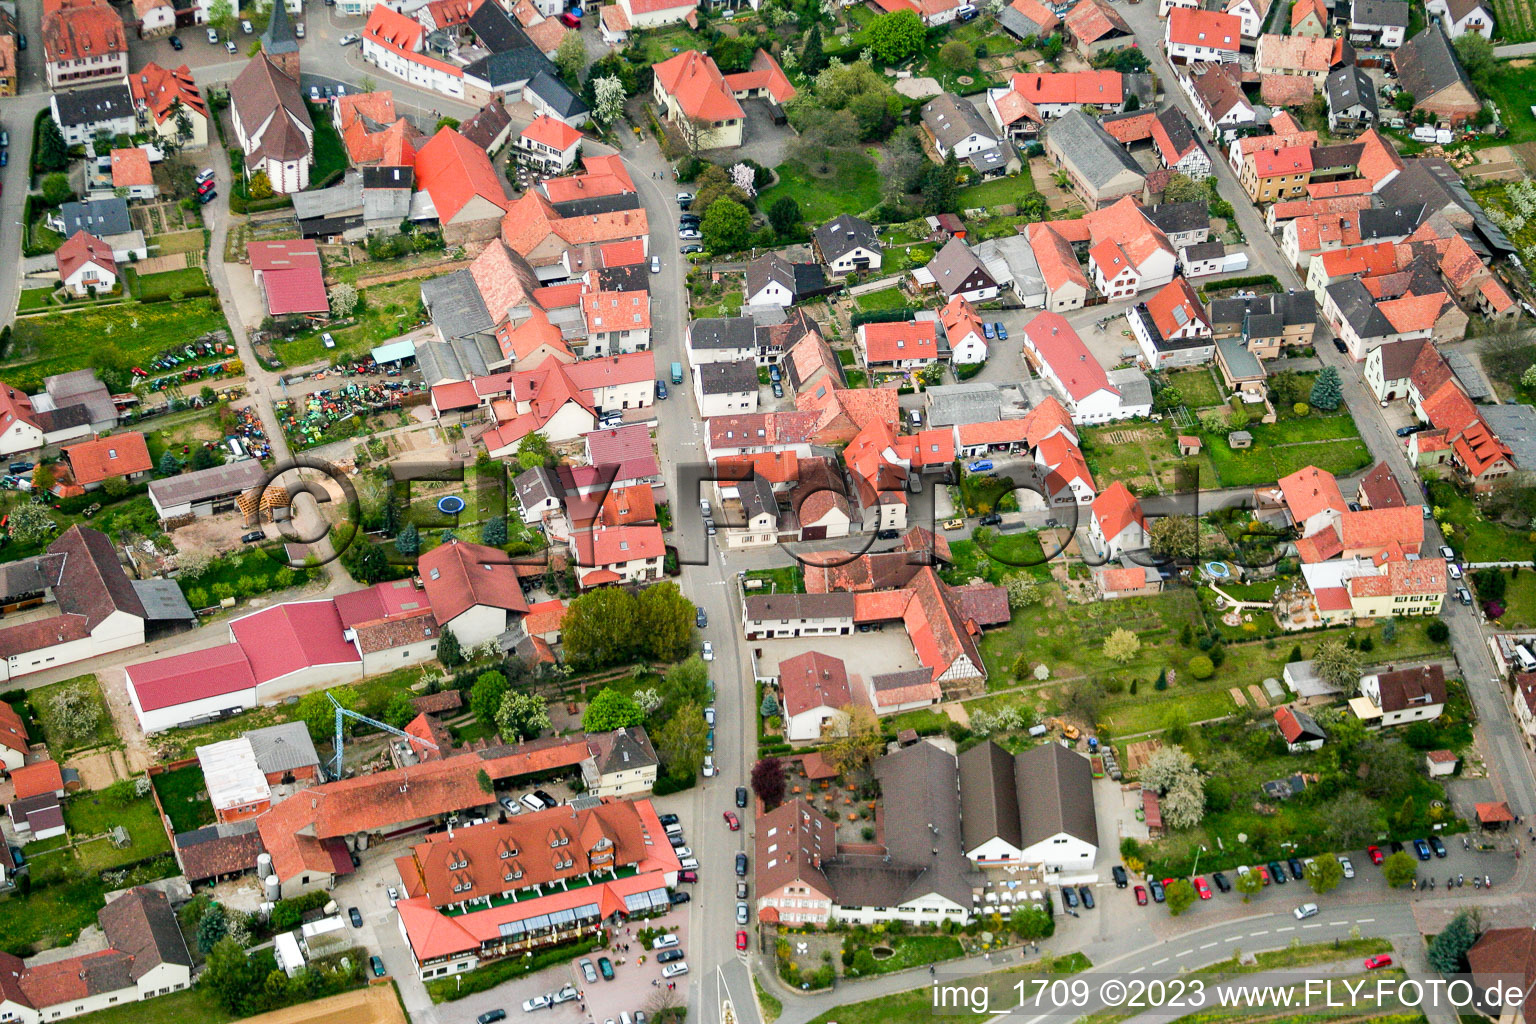 Vue aérienne de Quartier Schweigen in Schweigen-Rechtenbach dans le département Rhénanie-Palatinat, Allemagne